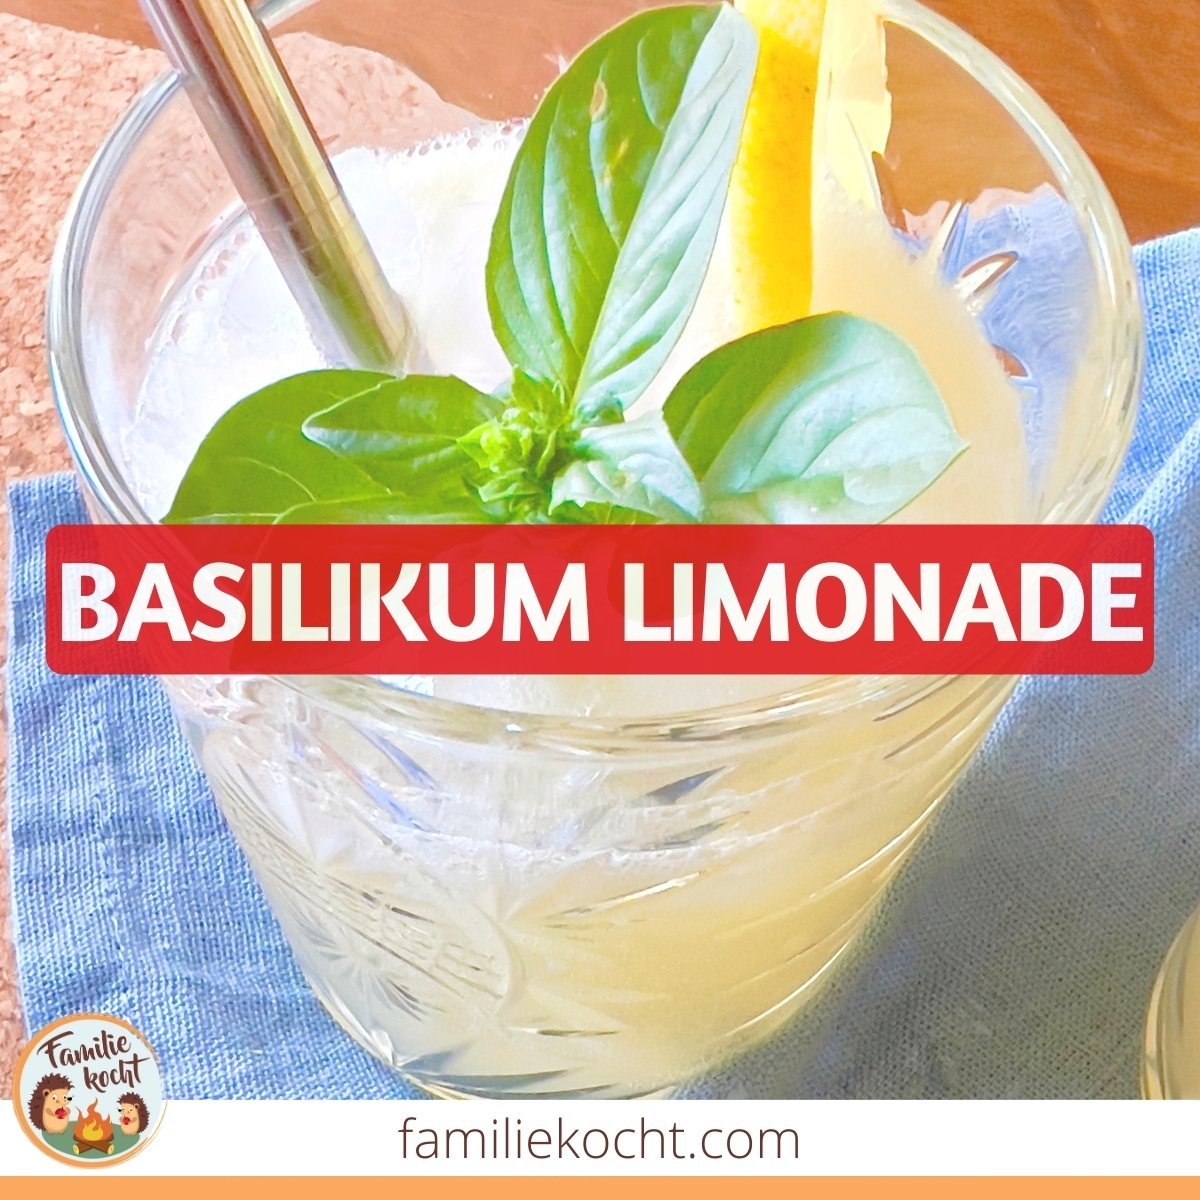 Basilikum Limonade